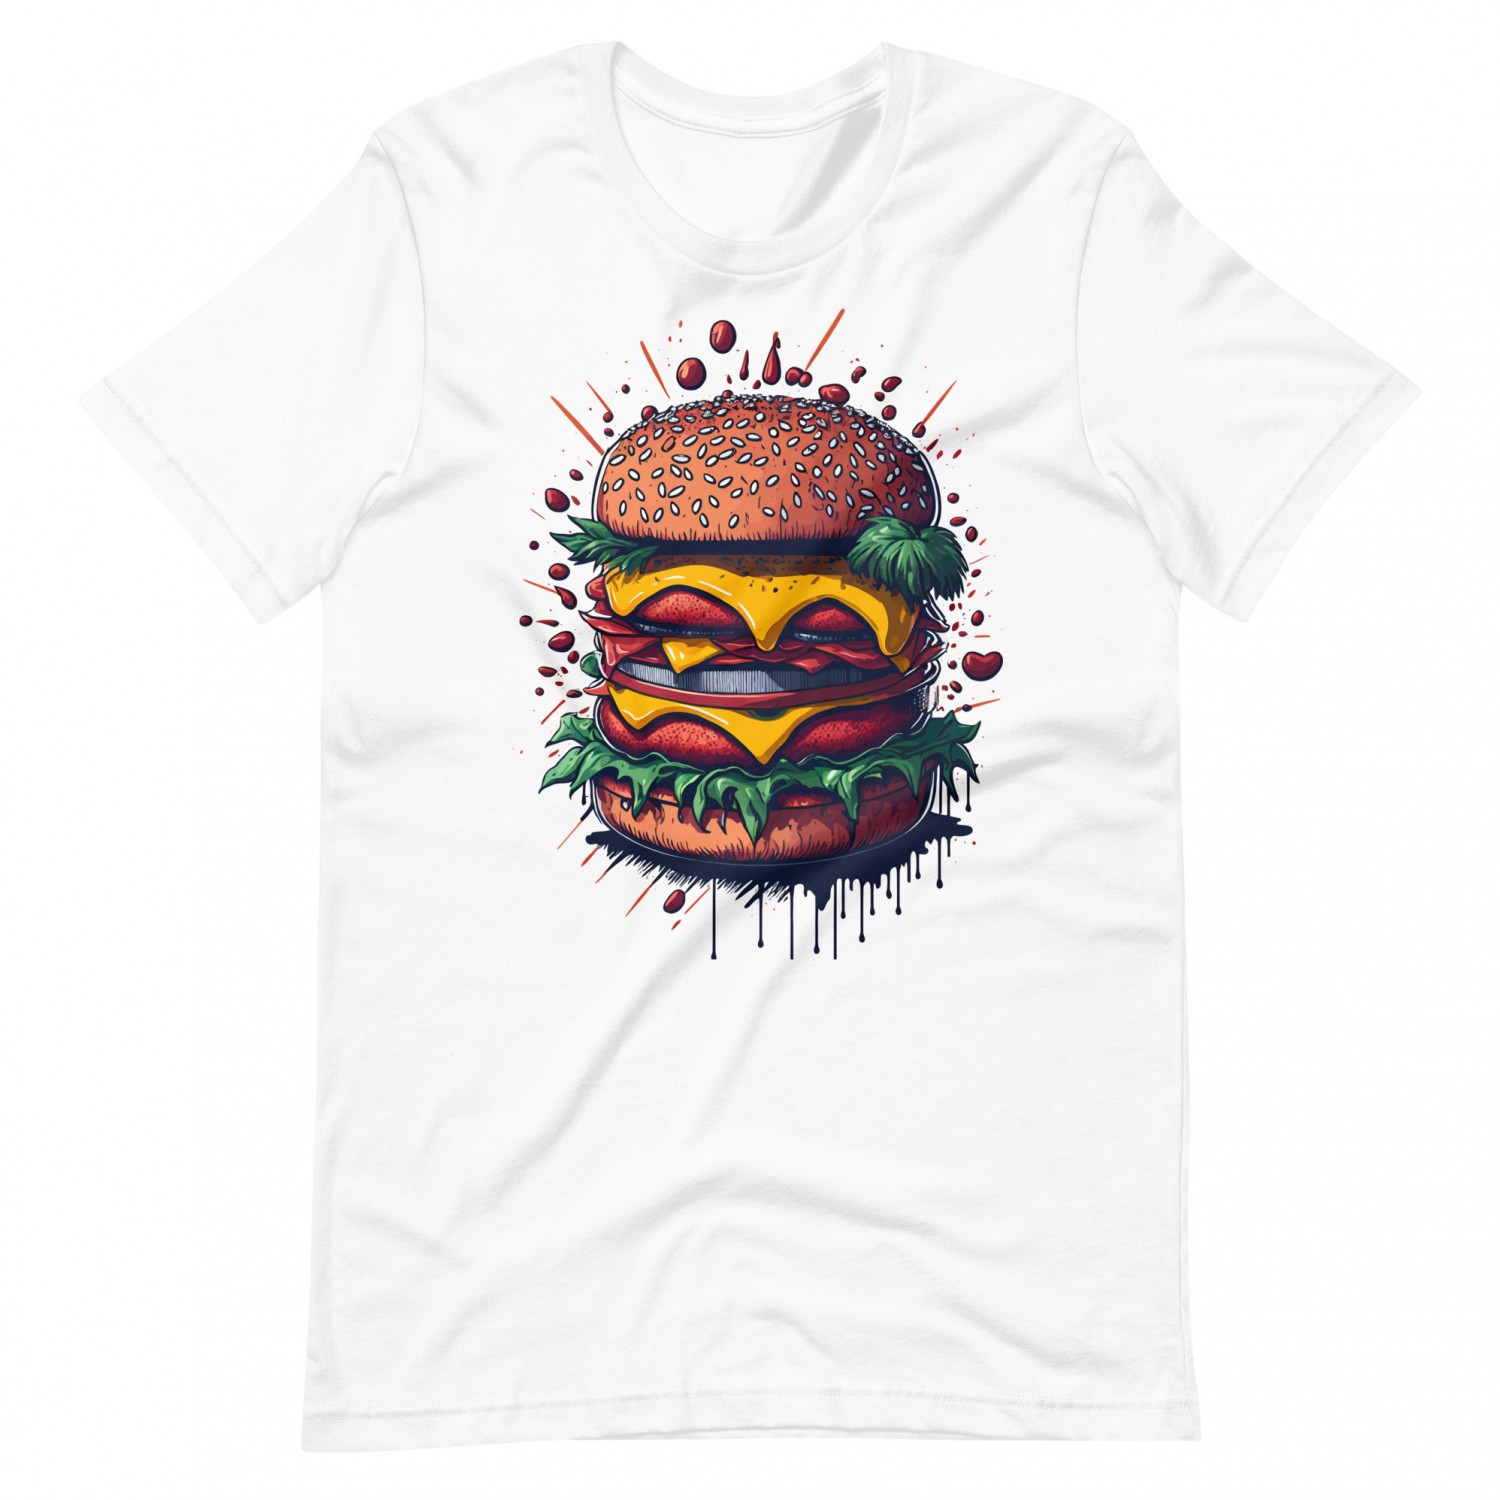 Kup koszulkę Burger